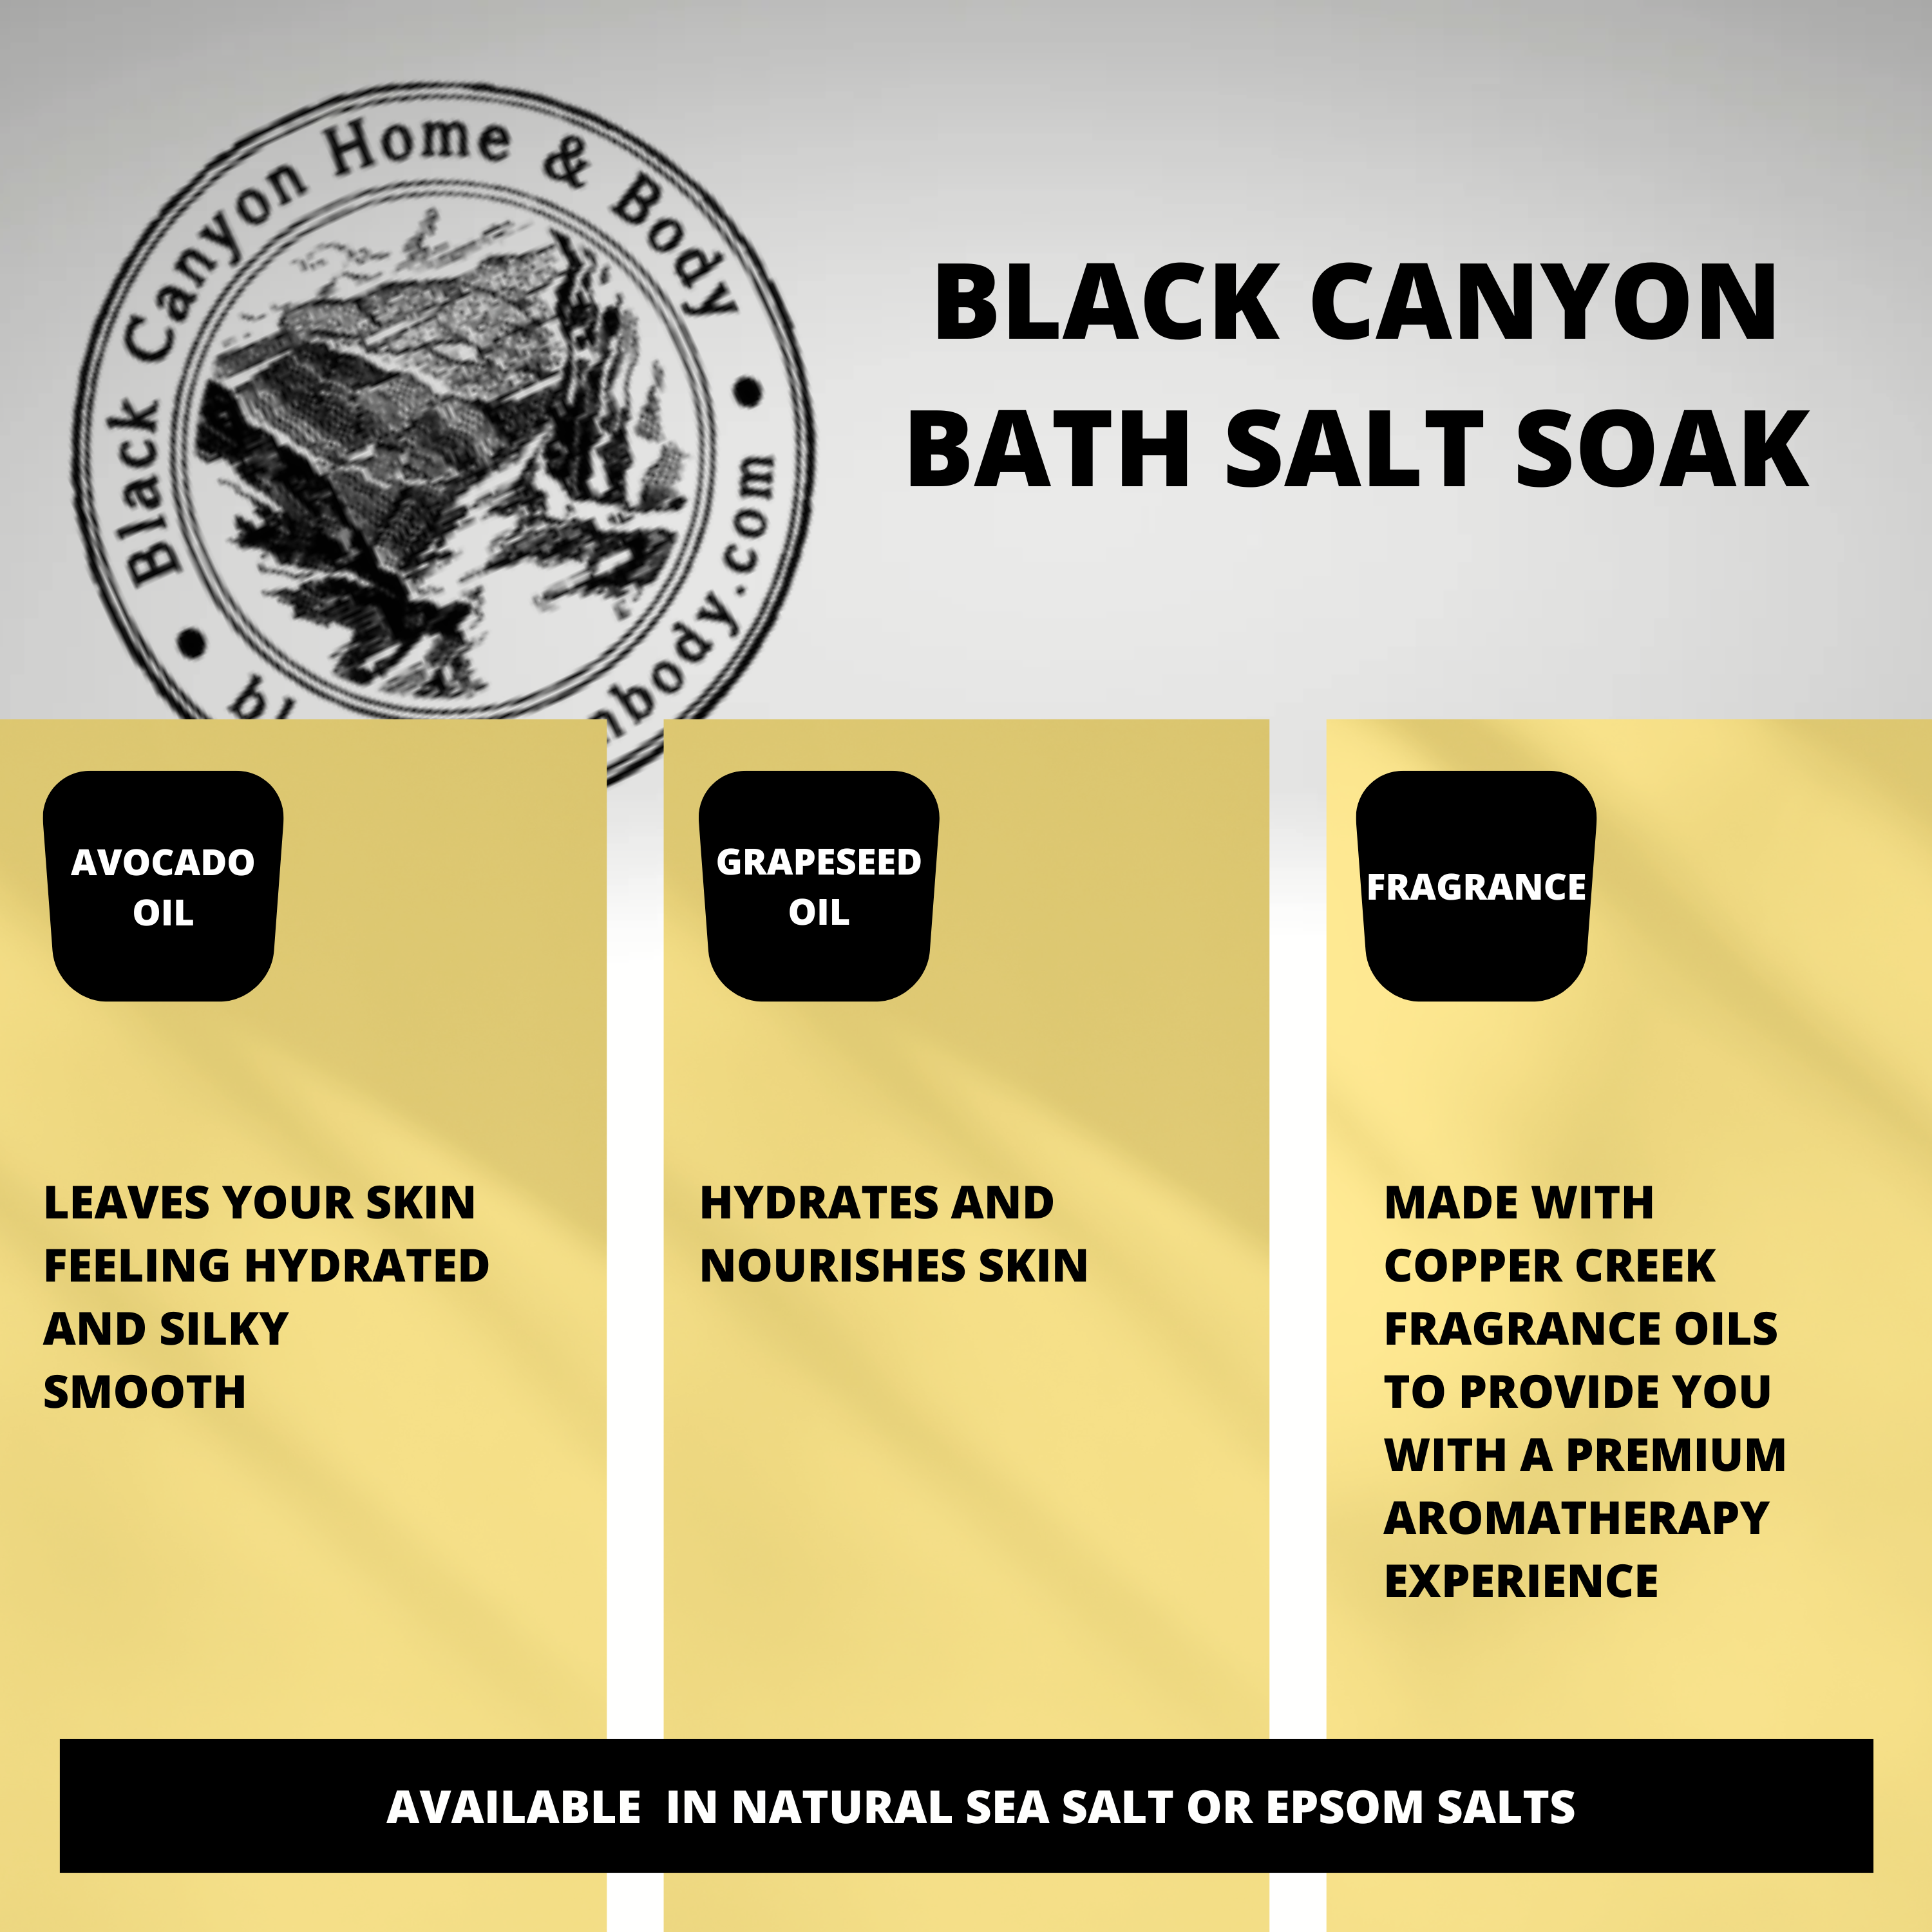 Black Canyon Altar Of Roses Scented Sea Salt Bath Soak